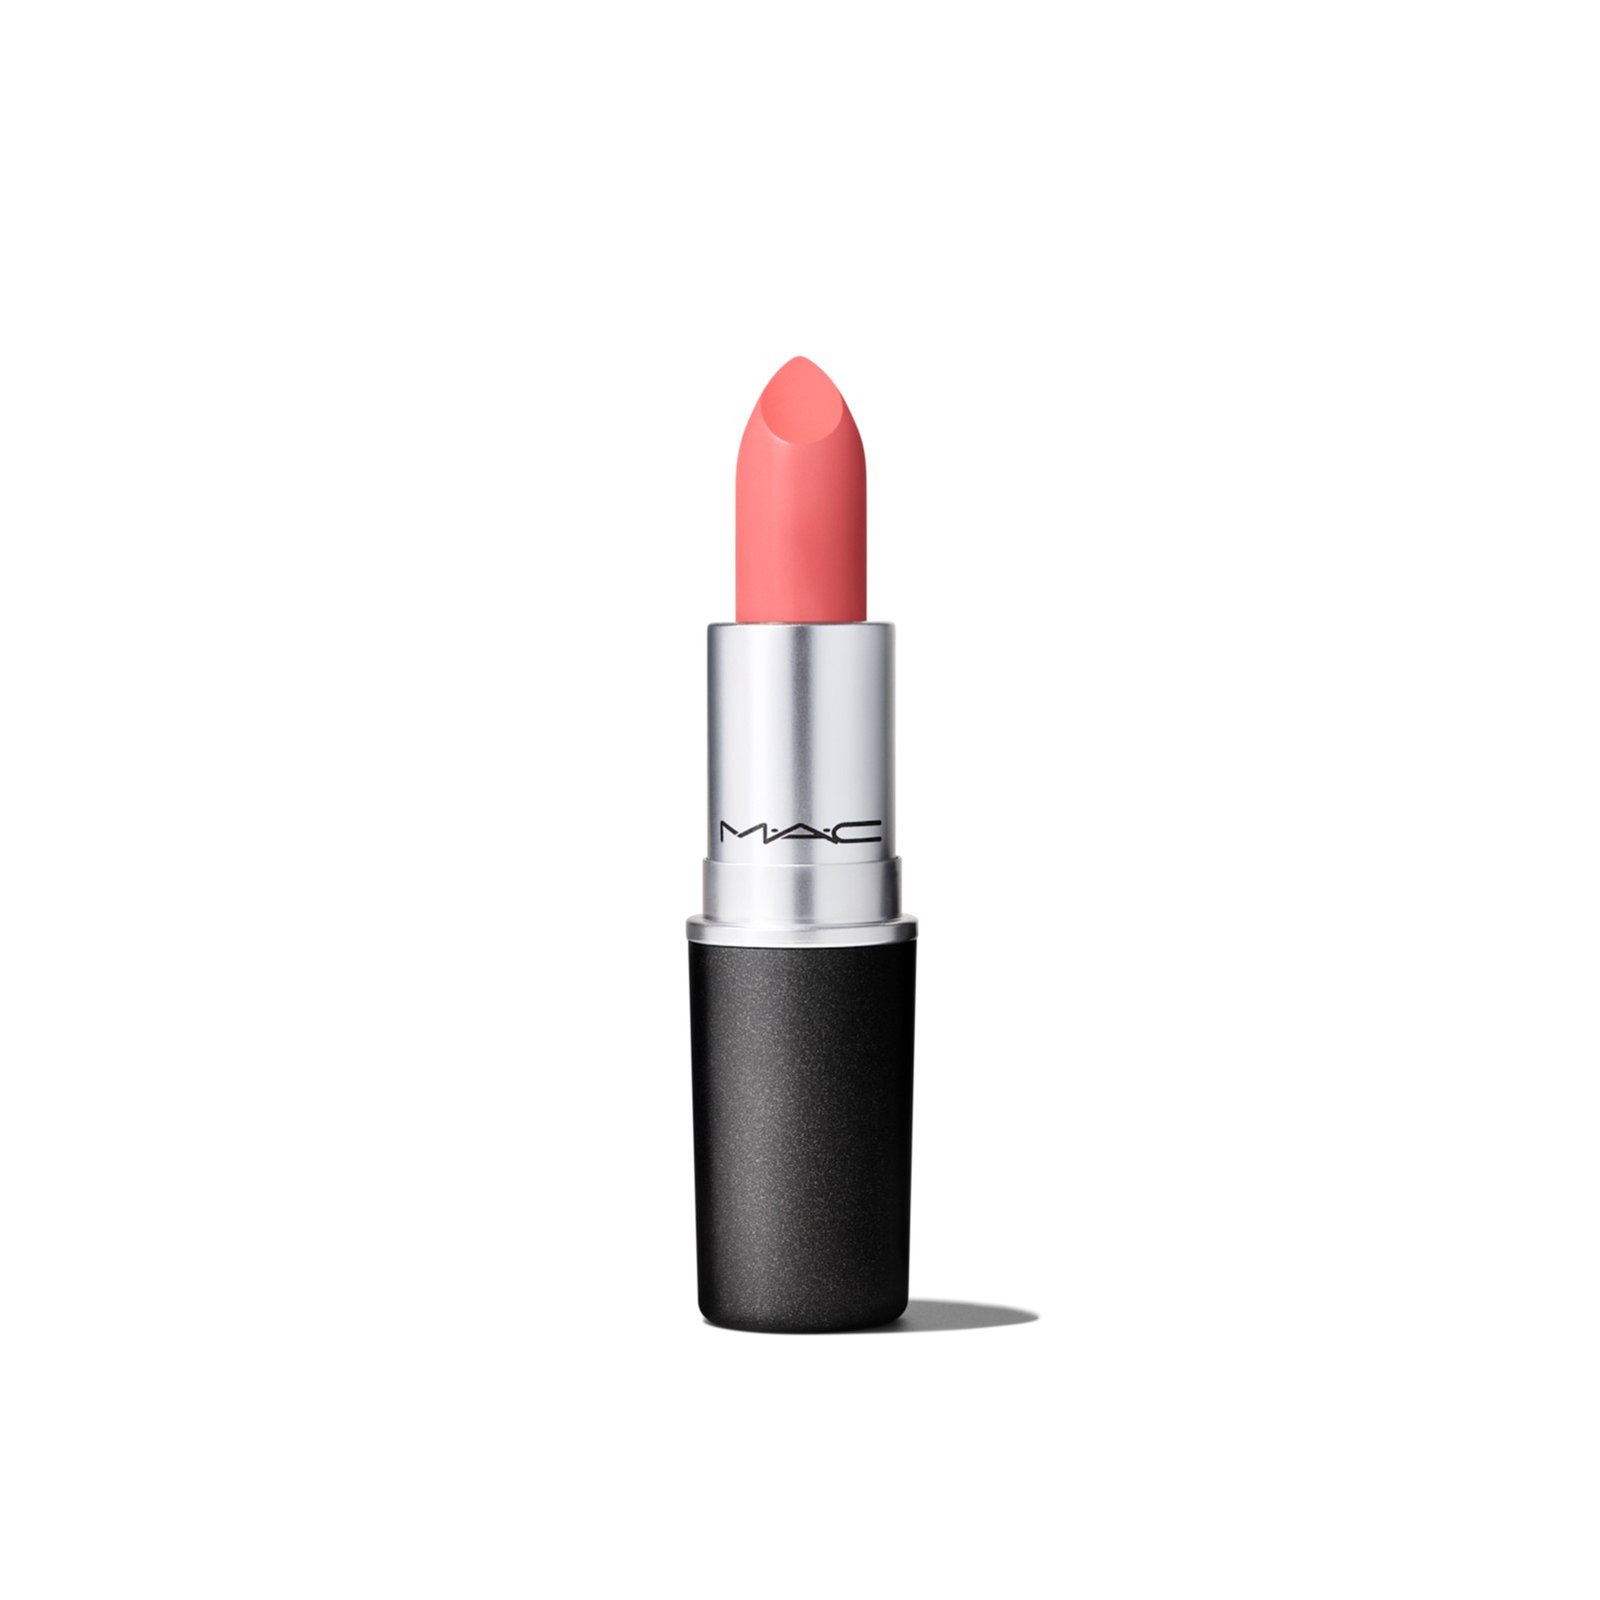 M.A.C Cosmetics Retro Matte Lipstick 703 Runway Hit 3g (0.10 oz)